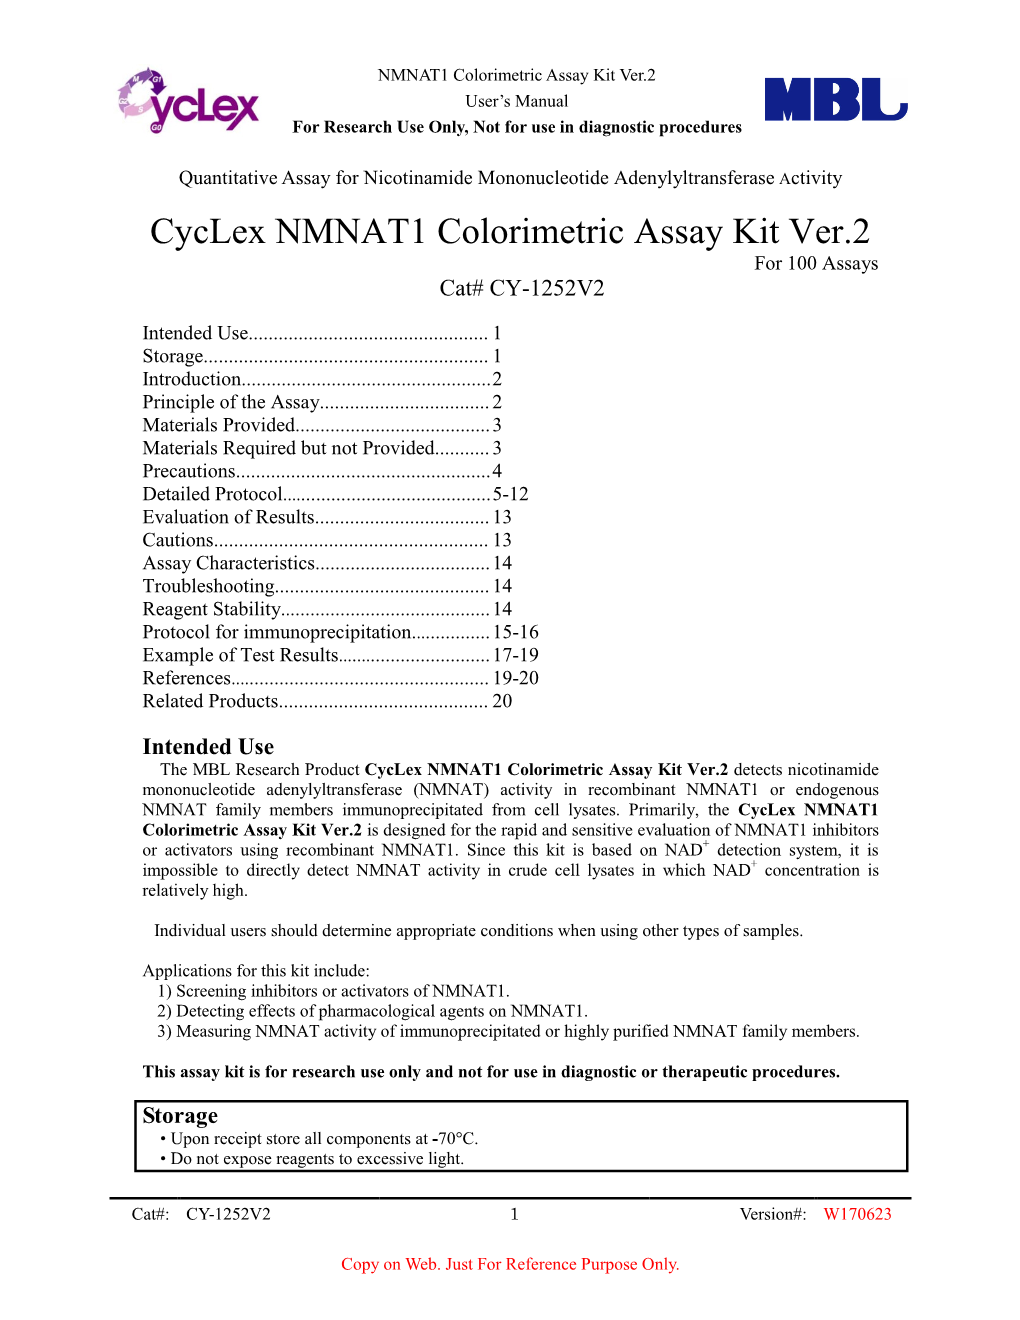 Cyclex NMNAT1 Colorimetric Assay Kit Ver.2 for 100 Assays Cat# CY-1252V2